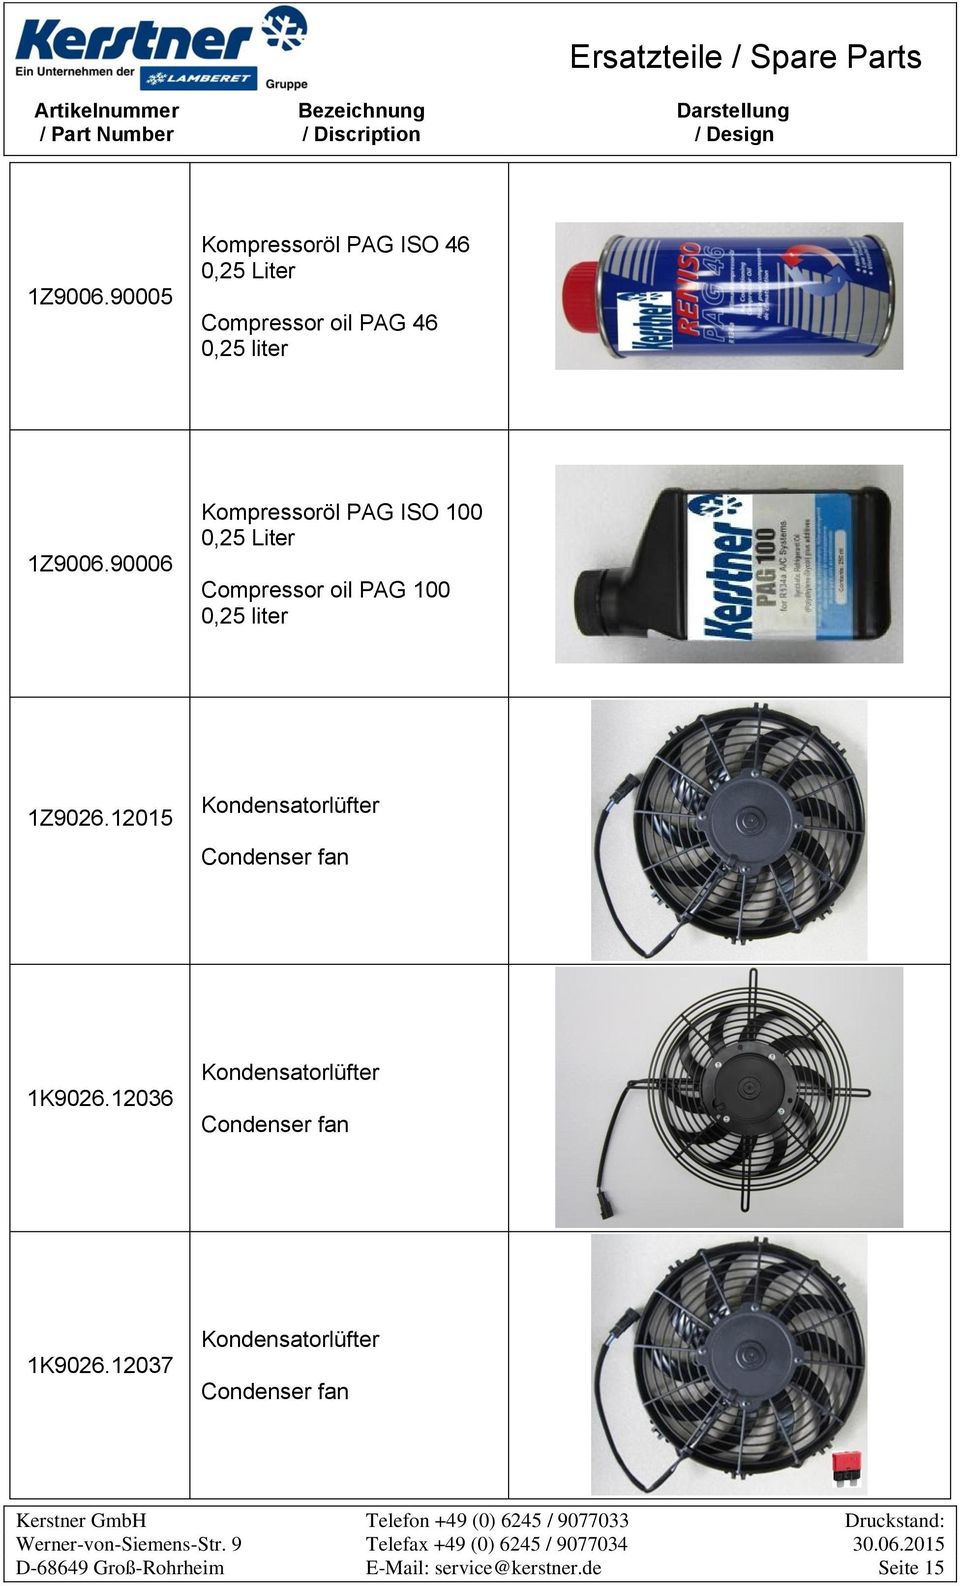 12015 Kondensatorlüfter Condenser fan 1K9026.12036 Kondensatorlüfter Condenser fan 1K9026.